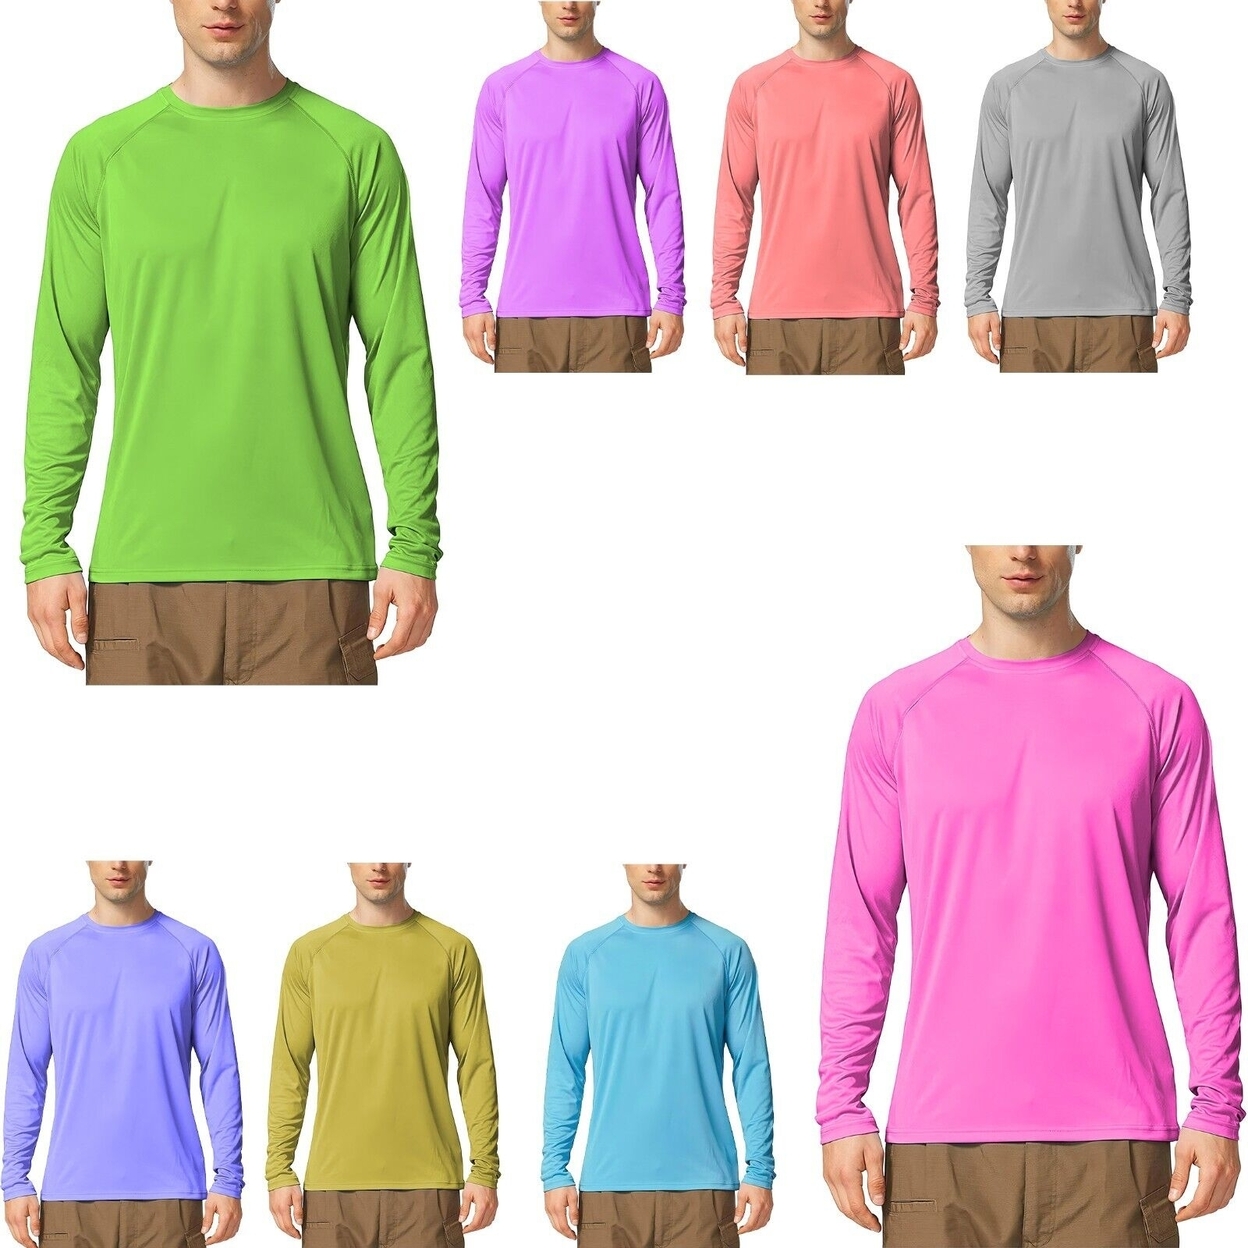 4-Pack: Men's Dri-Fit Moisture Wicking Athletic Cool Performance Slim Fit Long Sleeve T-Shirts - Medium